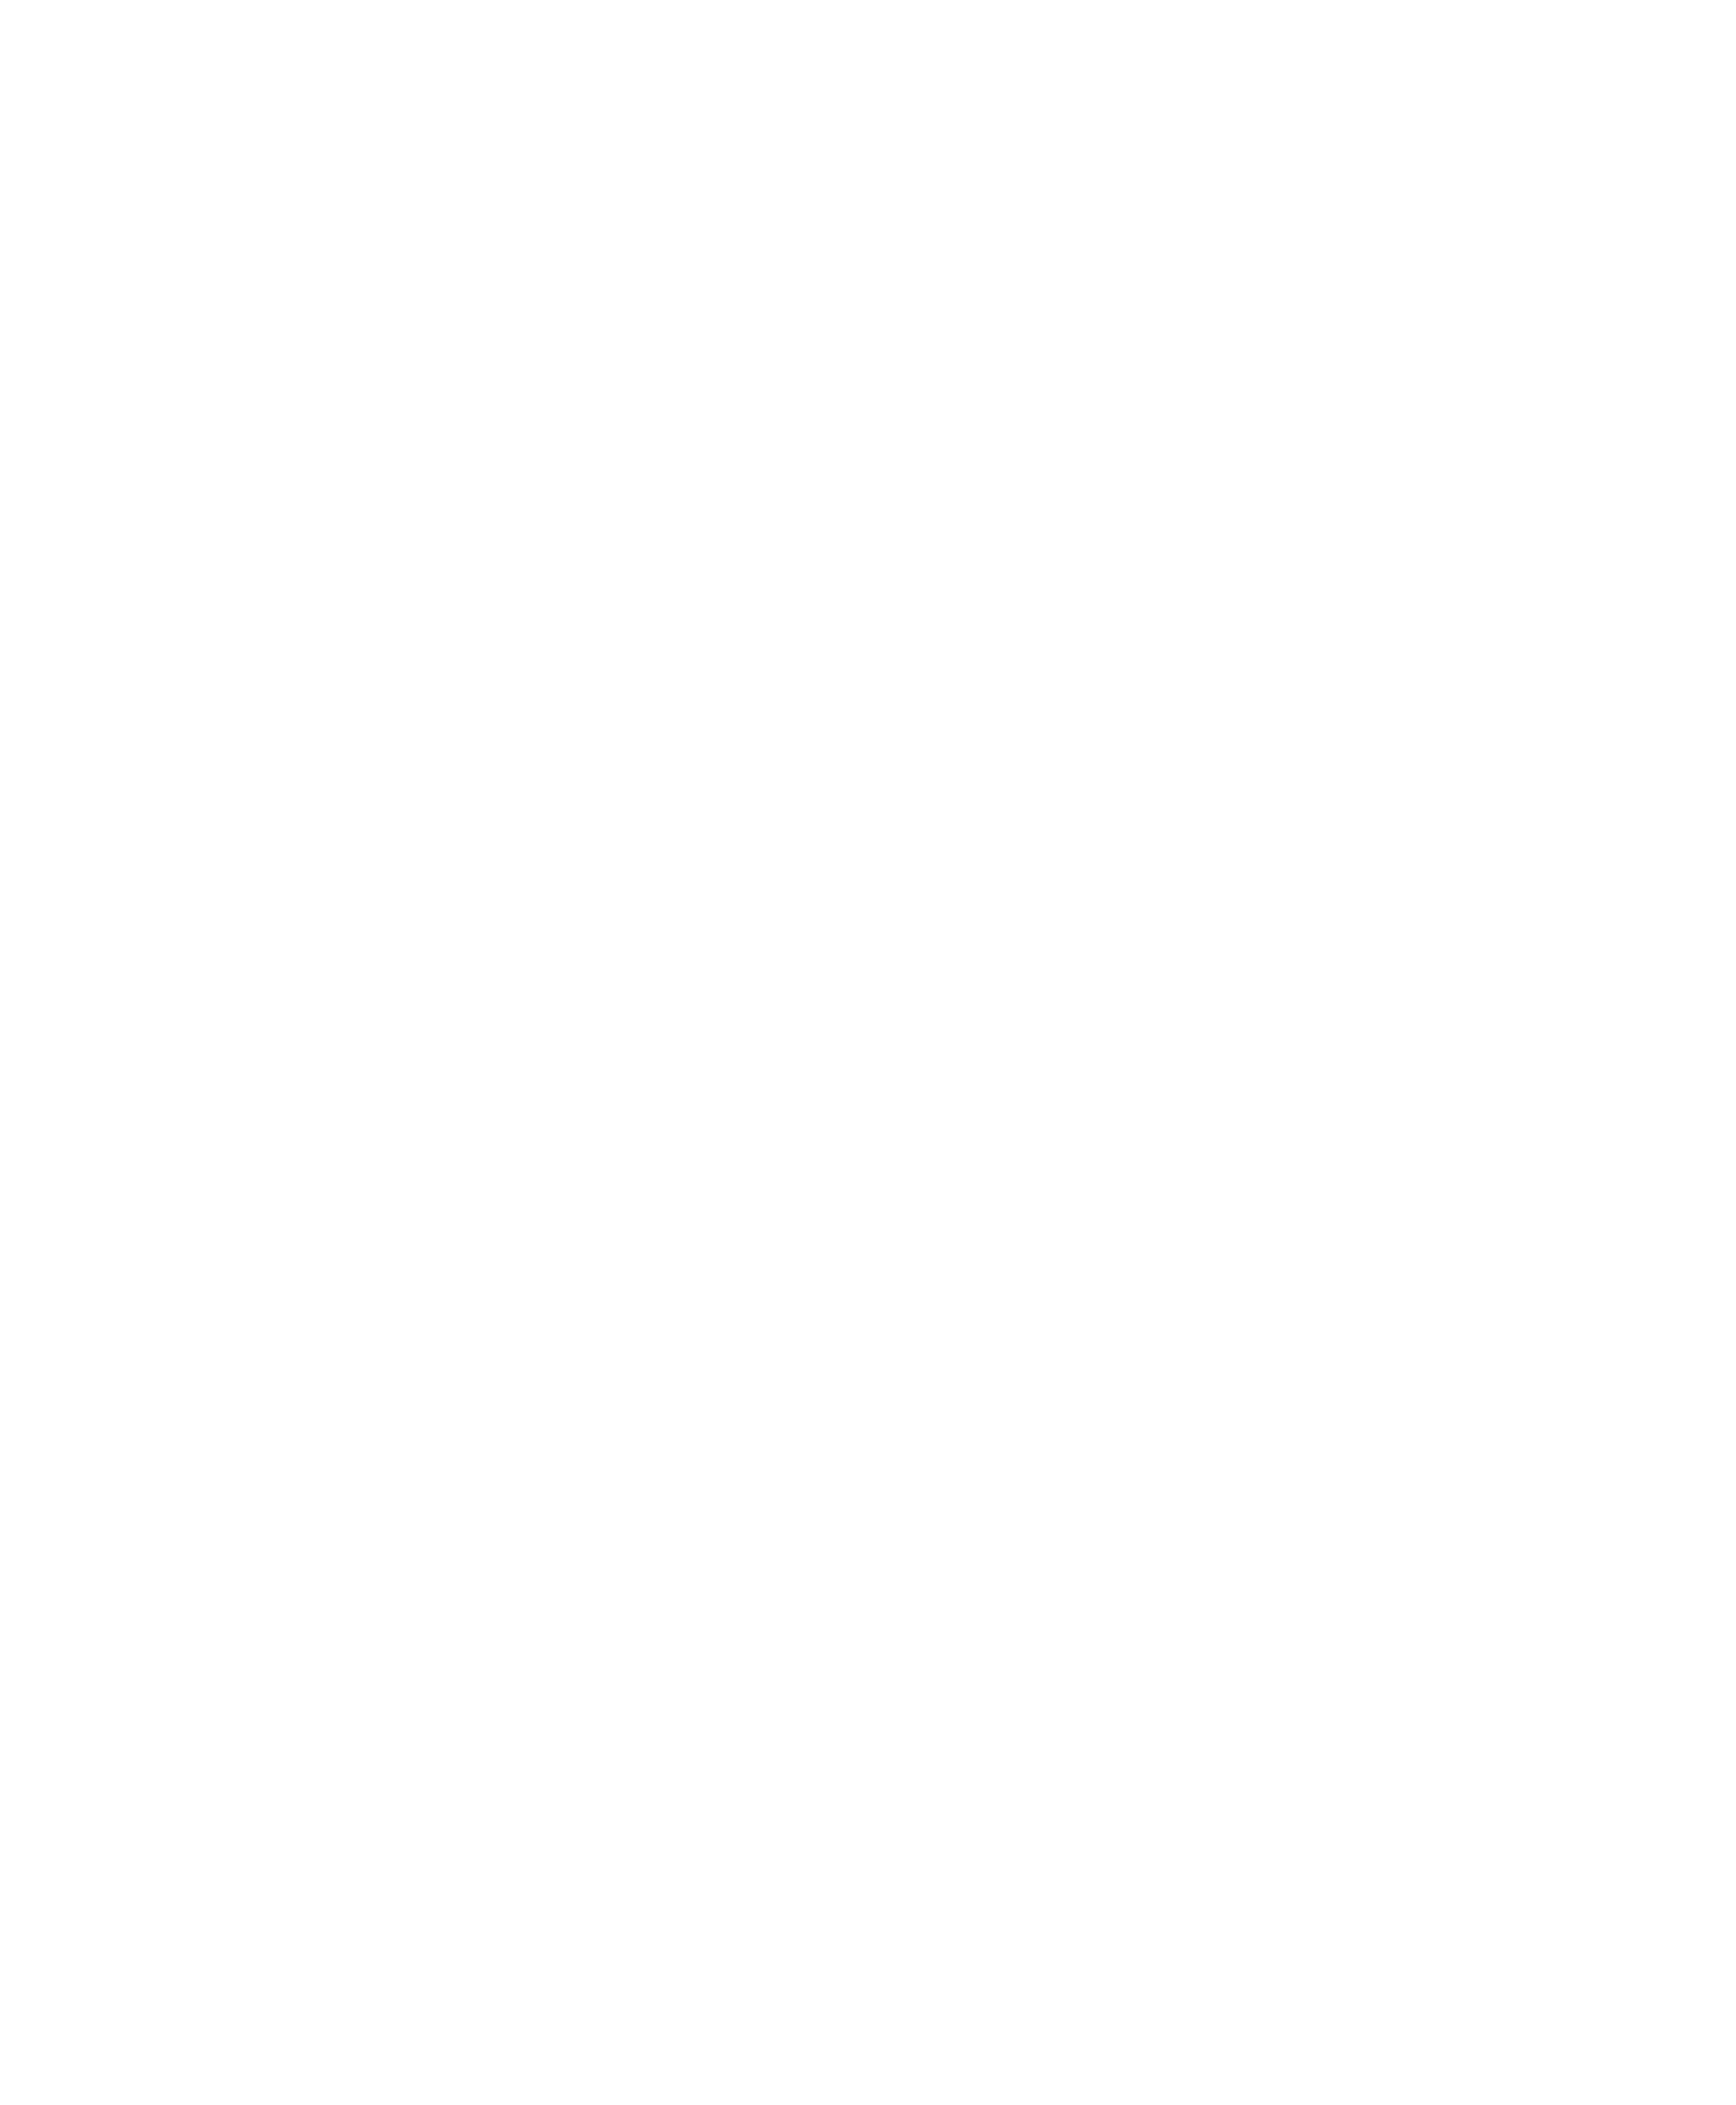 Alexander Belmonte Design Inc